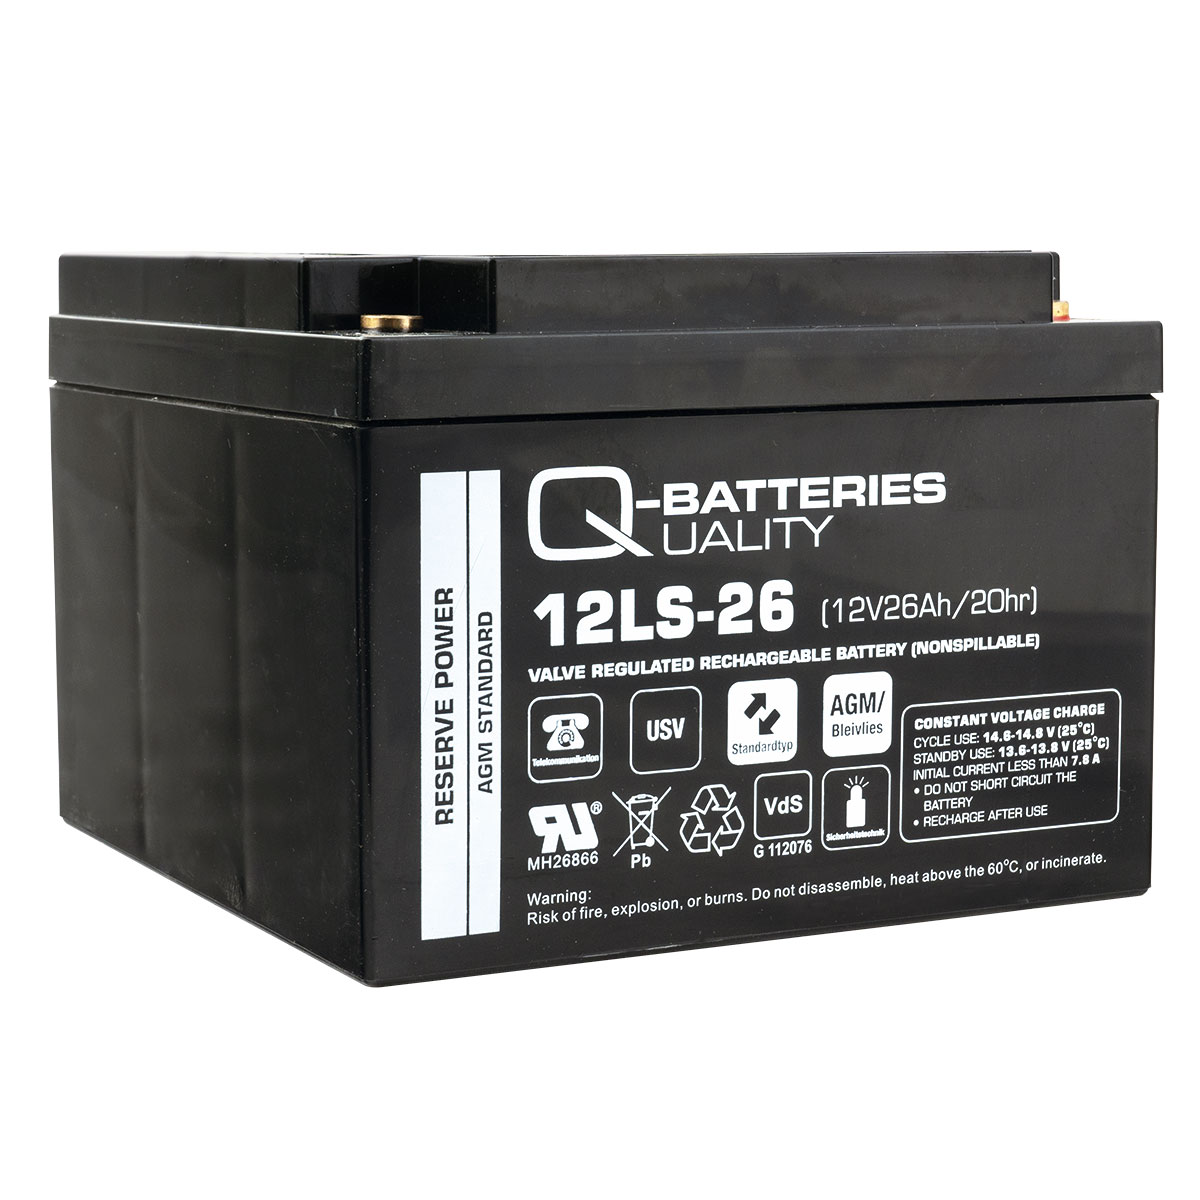 Q-Batteries 12LS-26 12V 26Ah Blei-Vlies-Akku / AGM VRLA mit VdS